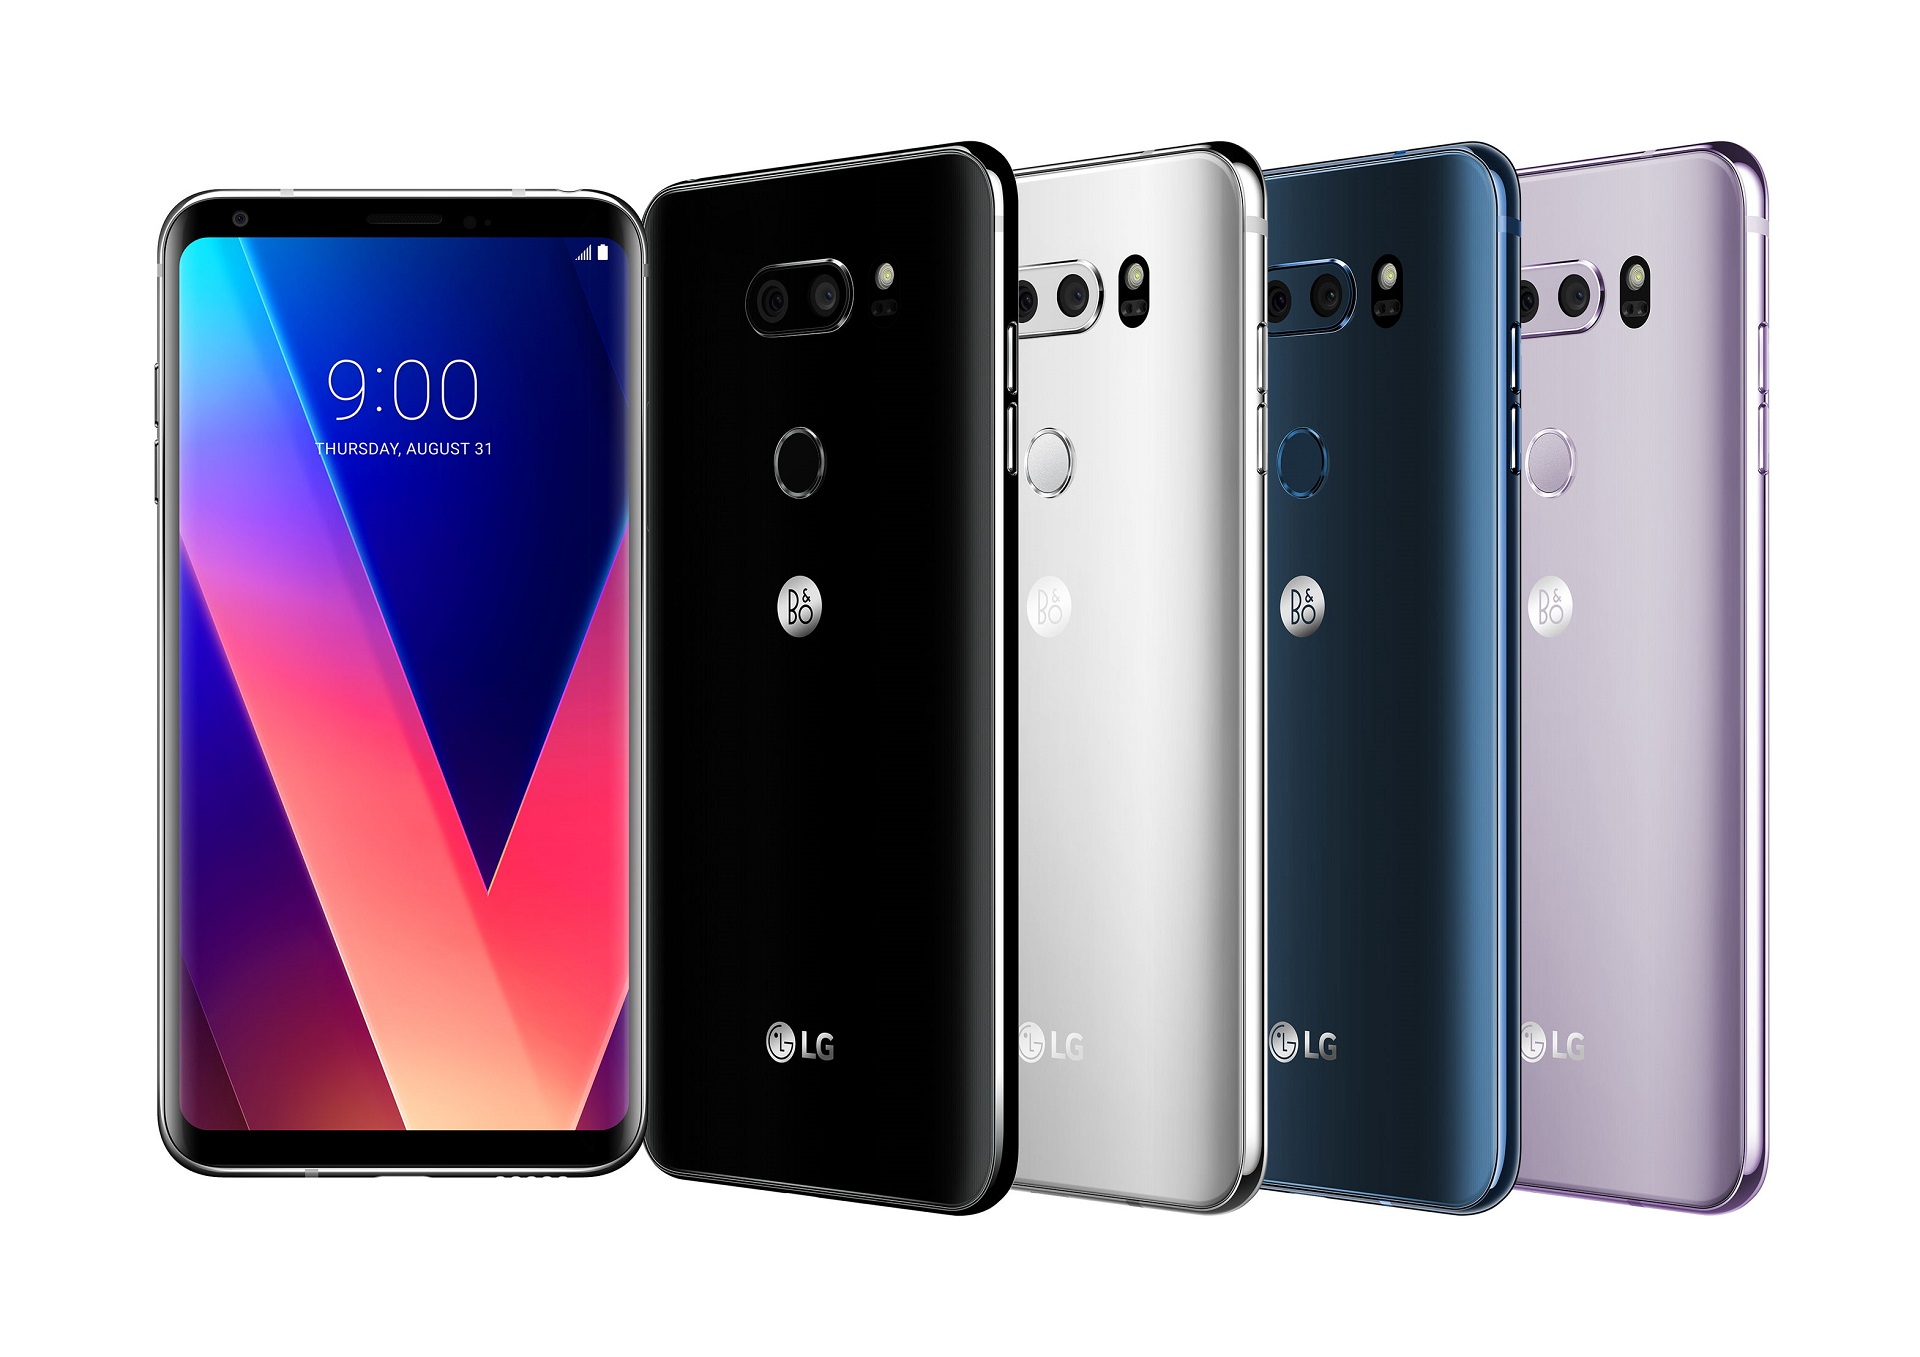 LG V30 + sales start in Ukraine